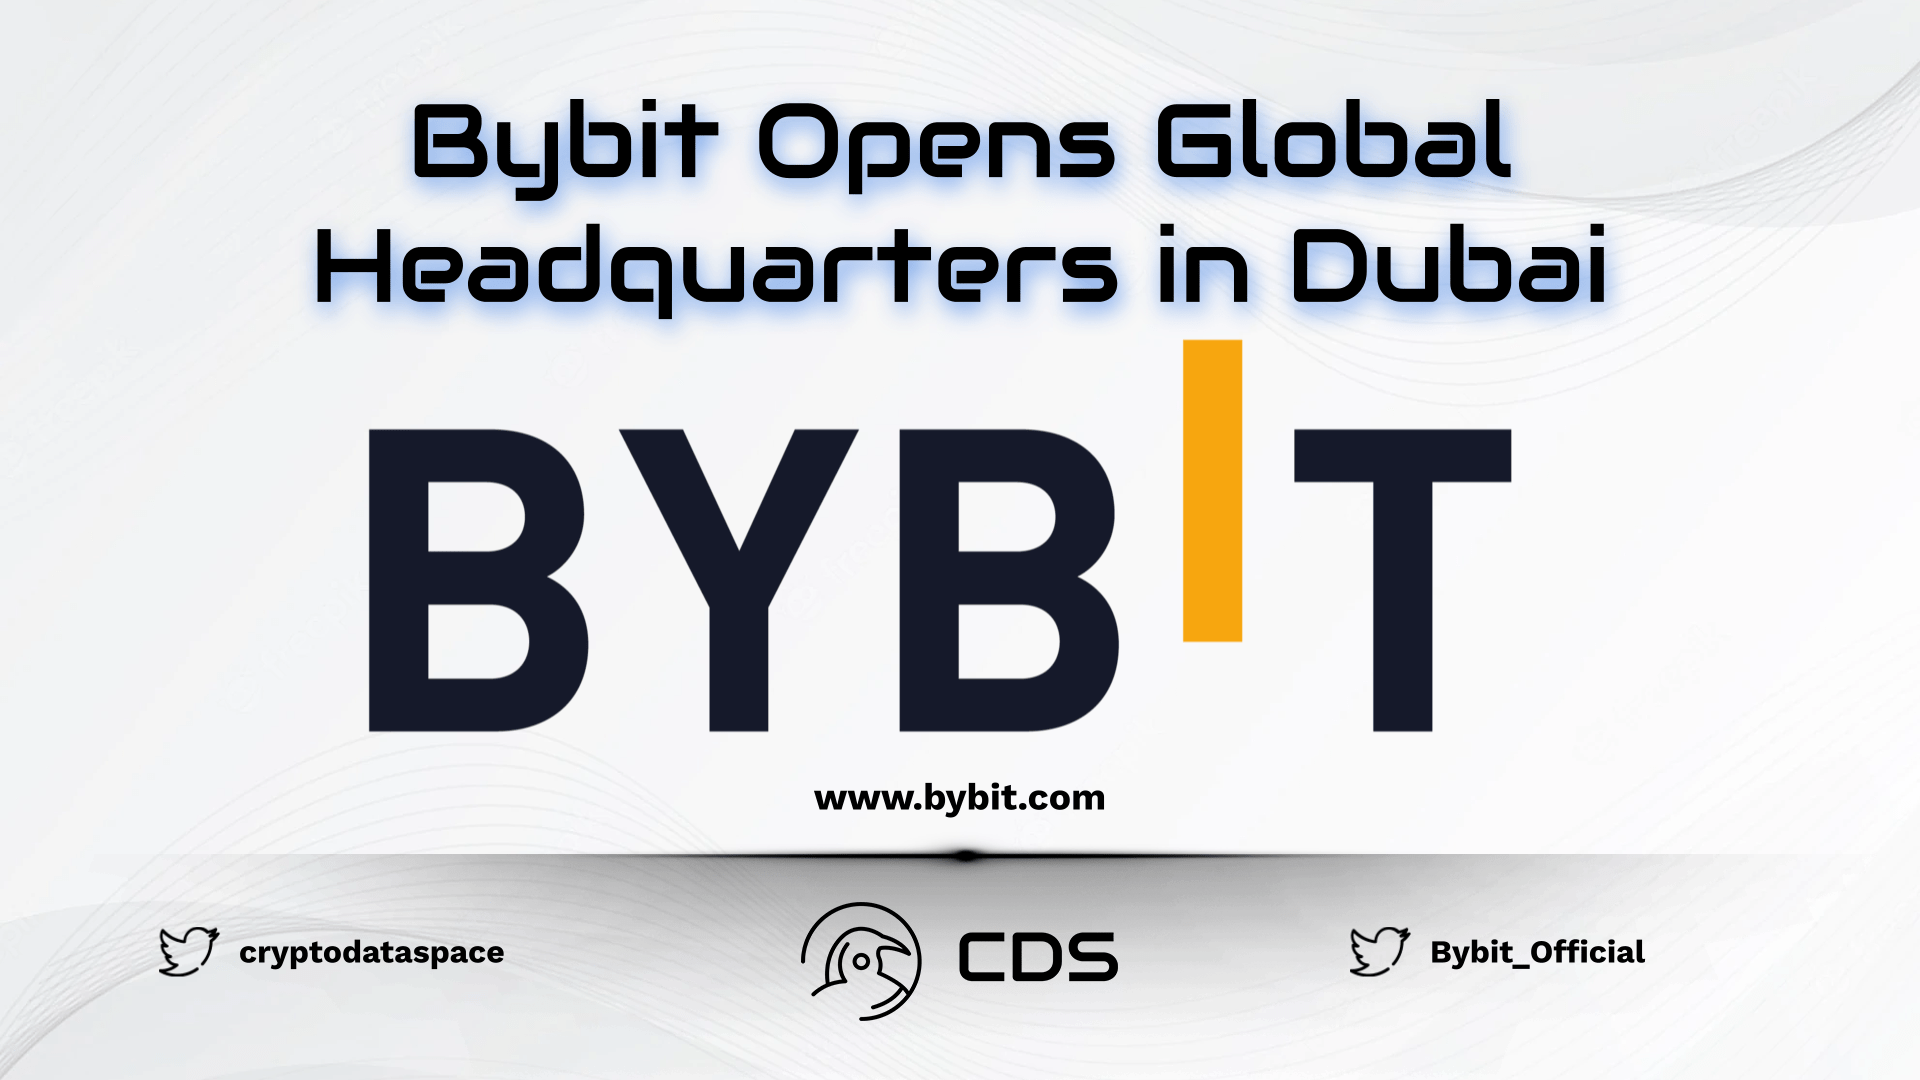 Bybit Opens Global Headquarters in Dubai